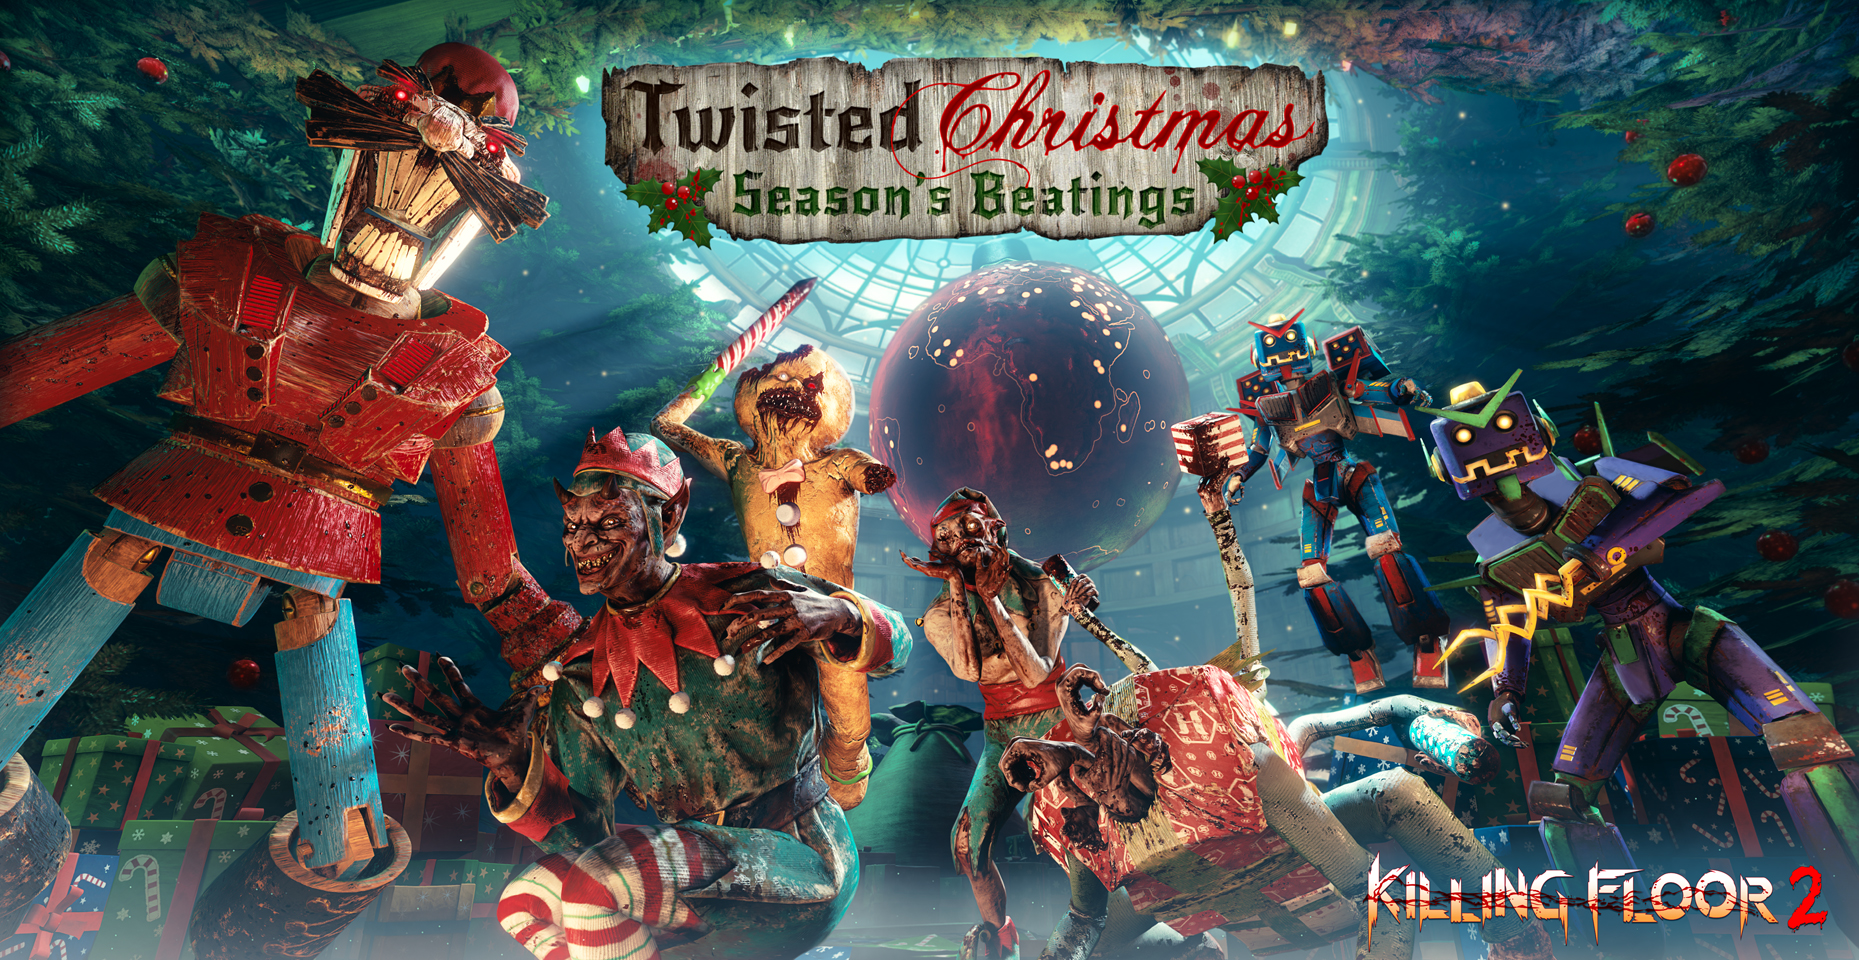 Killing Floor 2 - Twisted Christmas Seasons Beatings art (Tripwire Interactive)